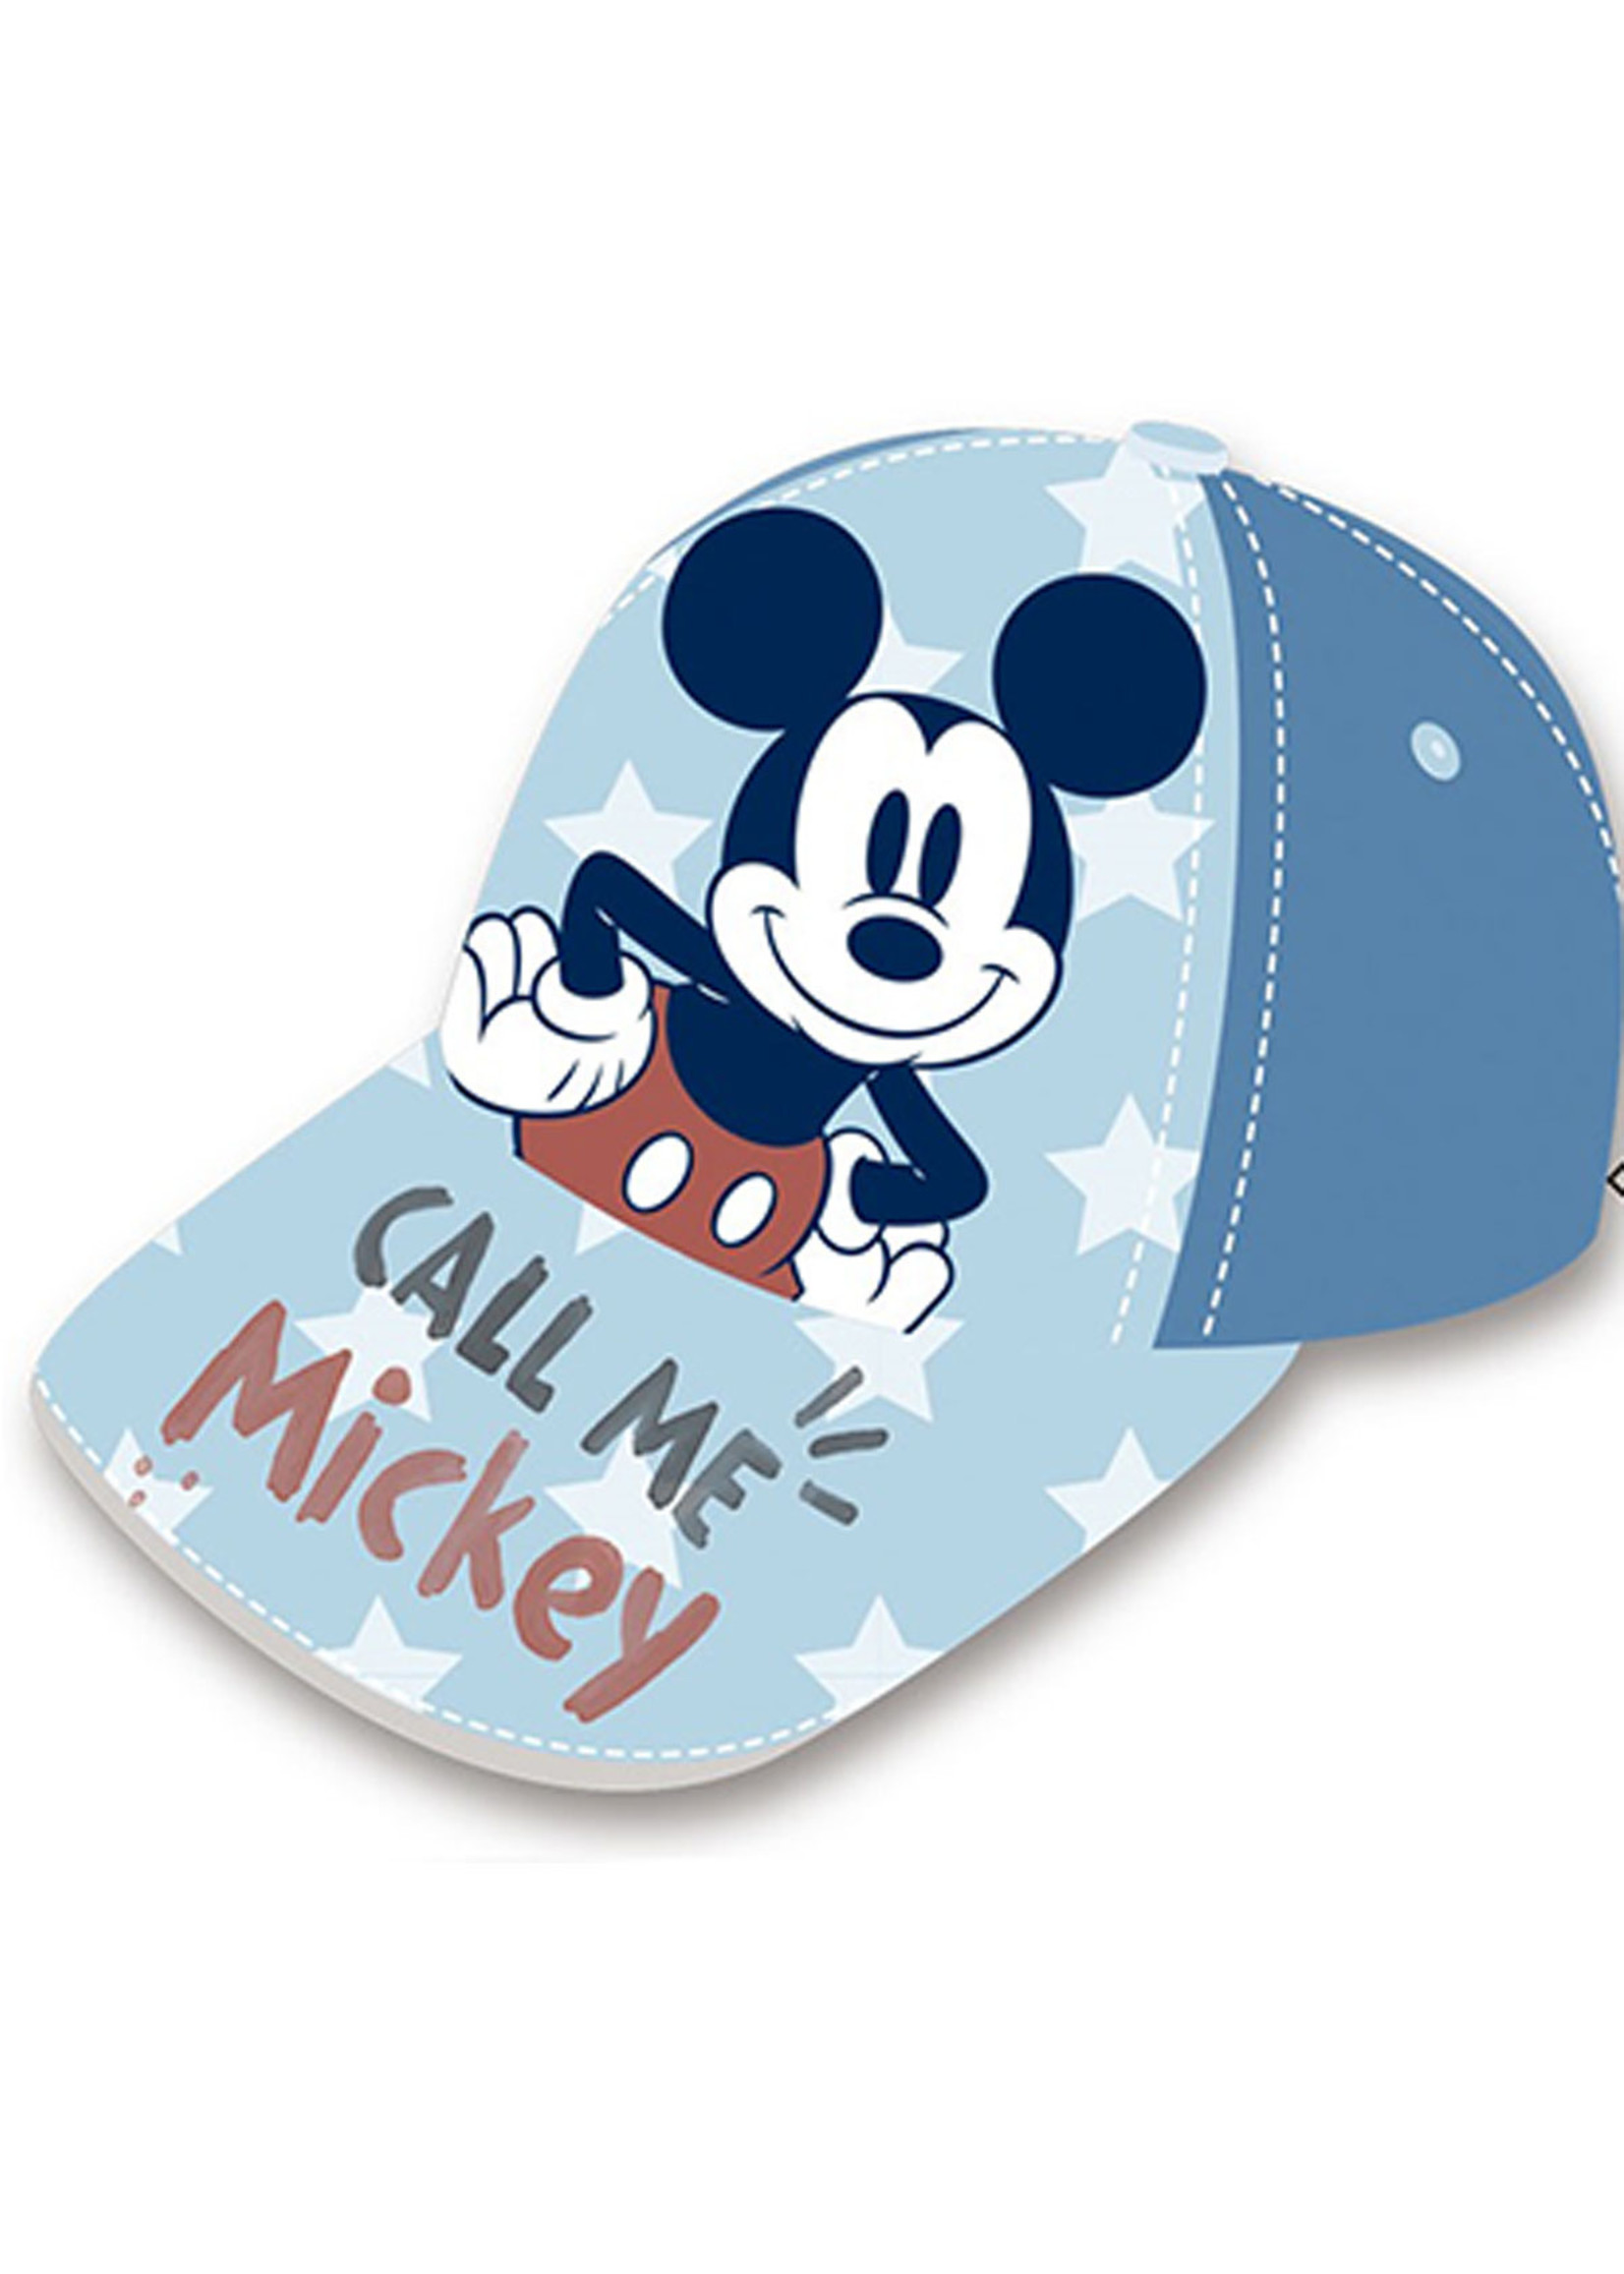 Disney Mickey Mouse baseball cap from Disney blue